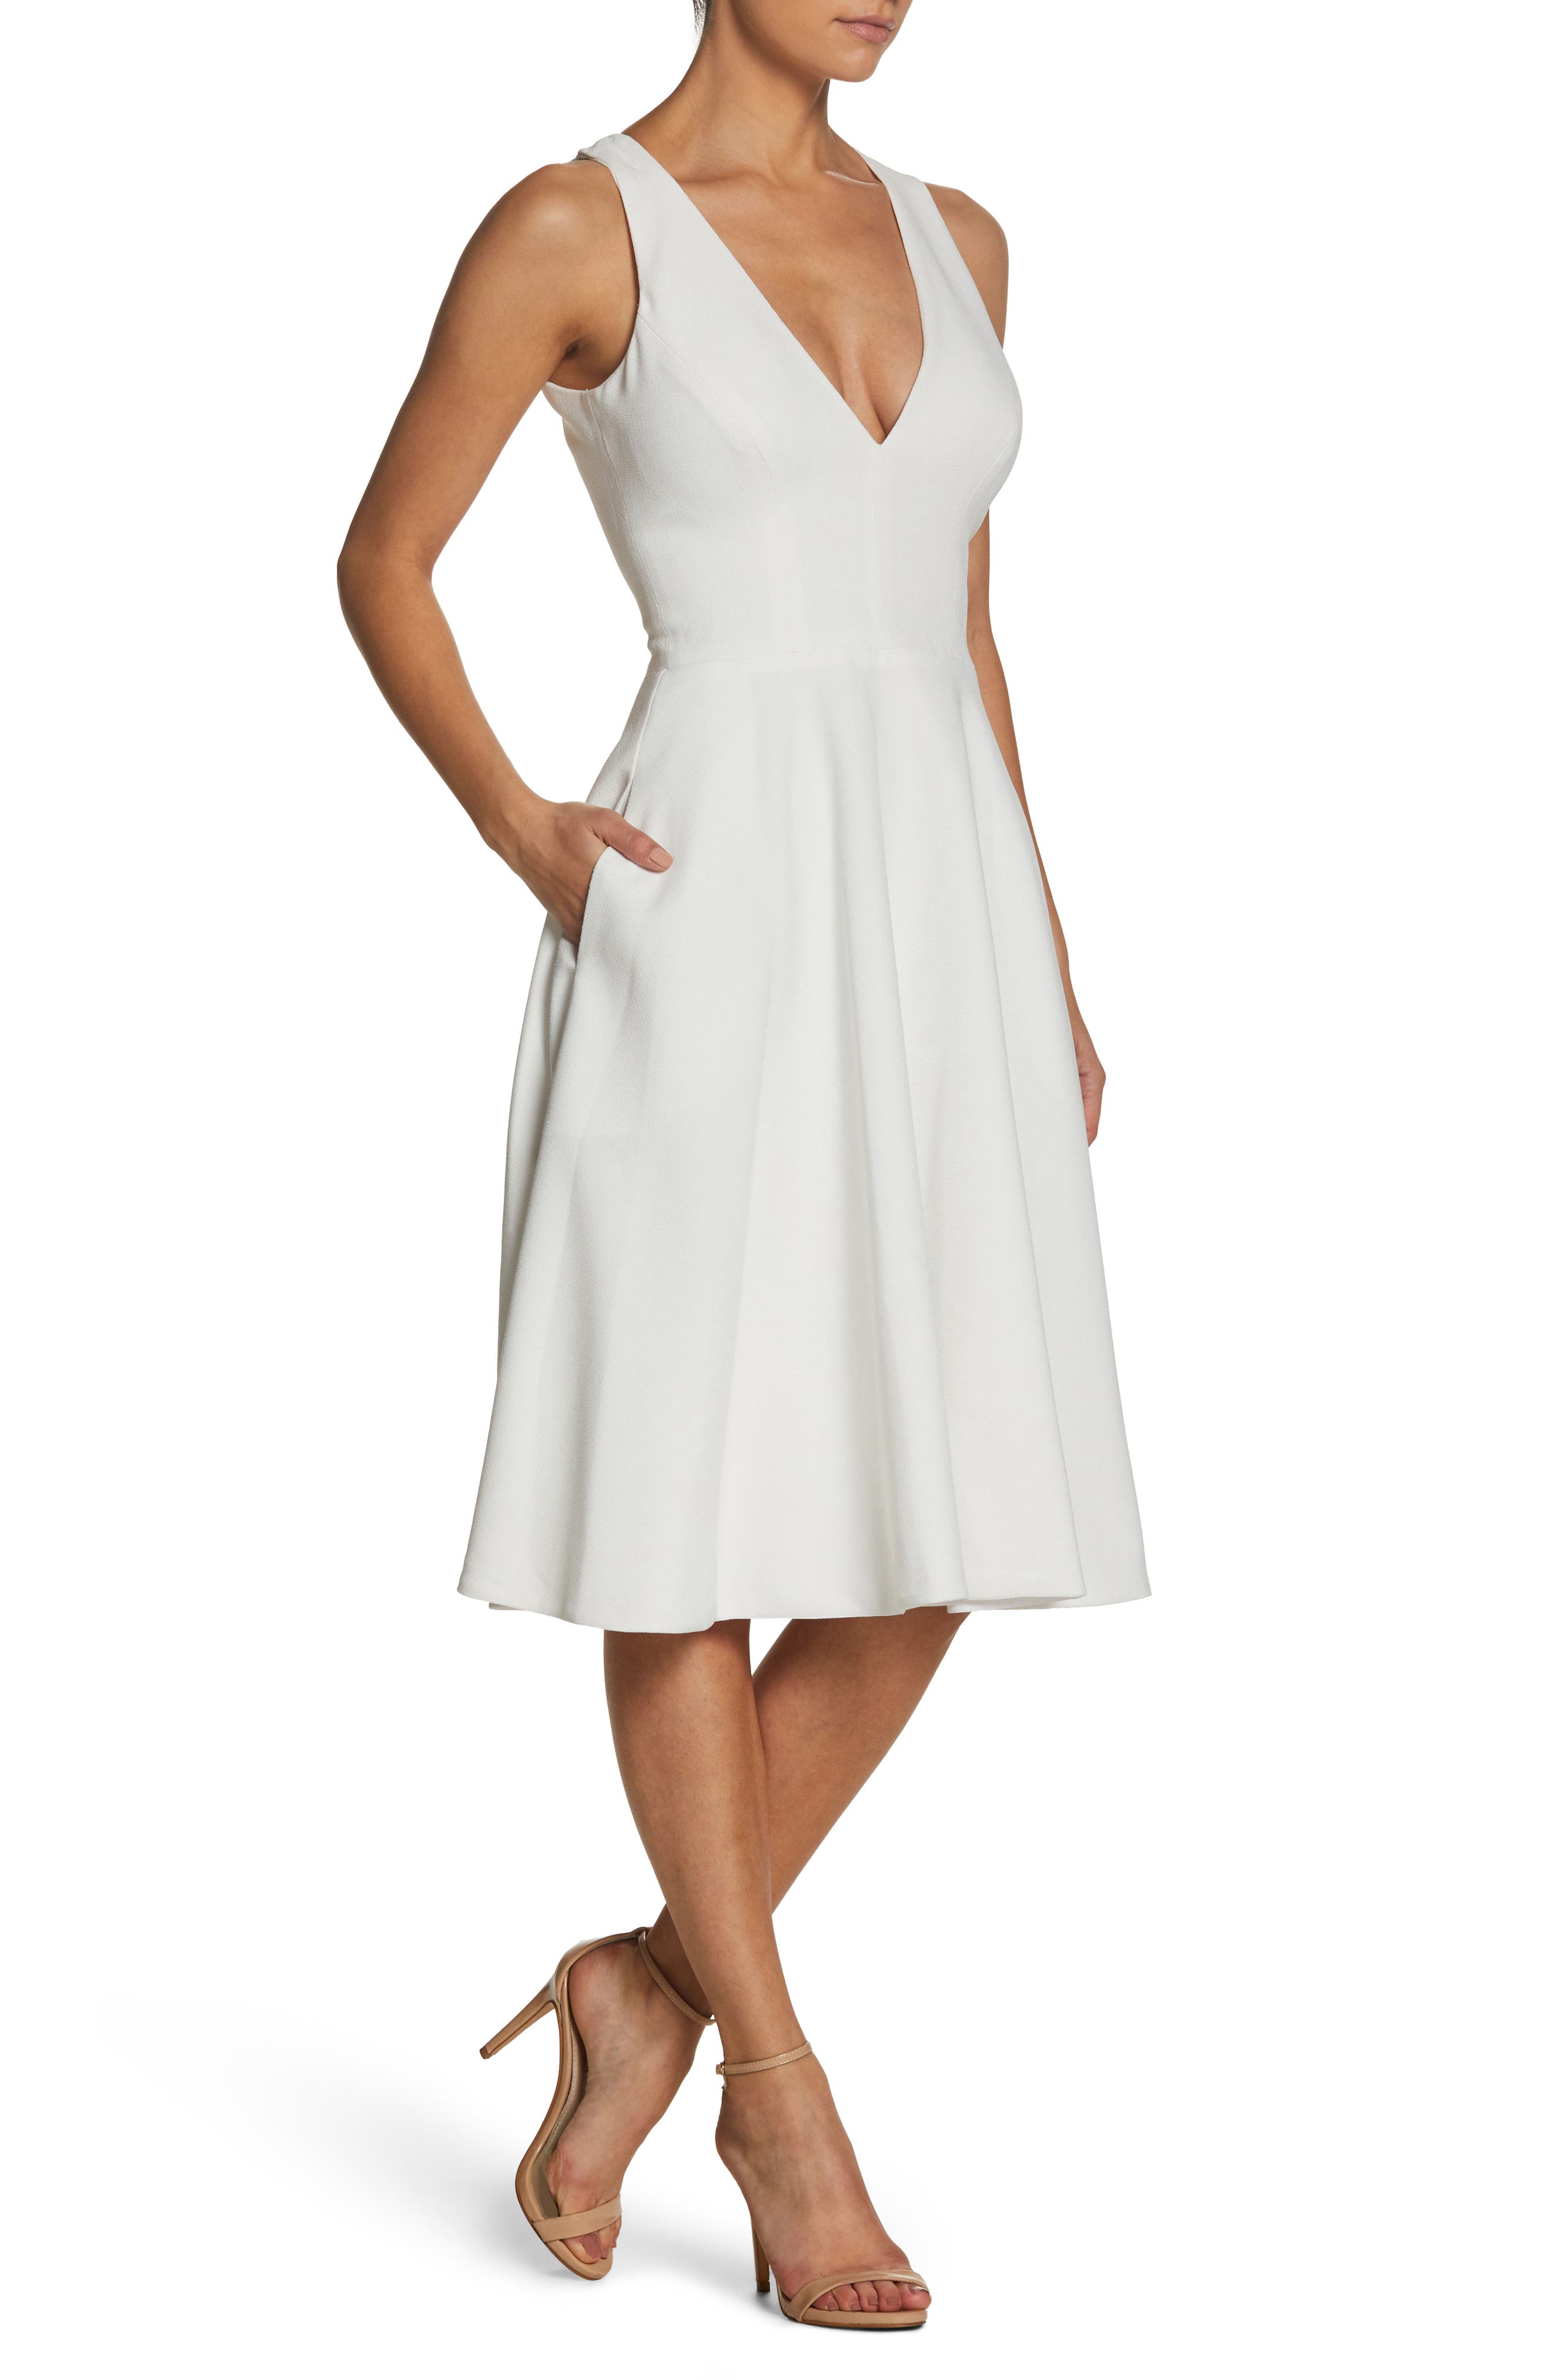 fitting white dress